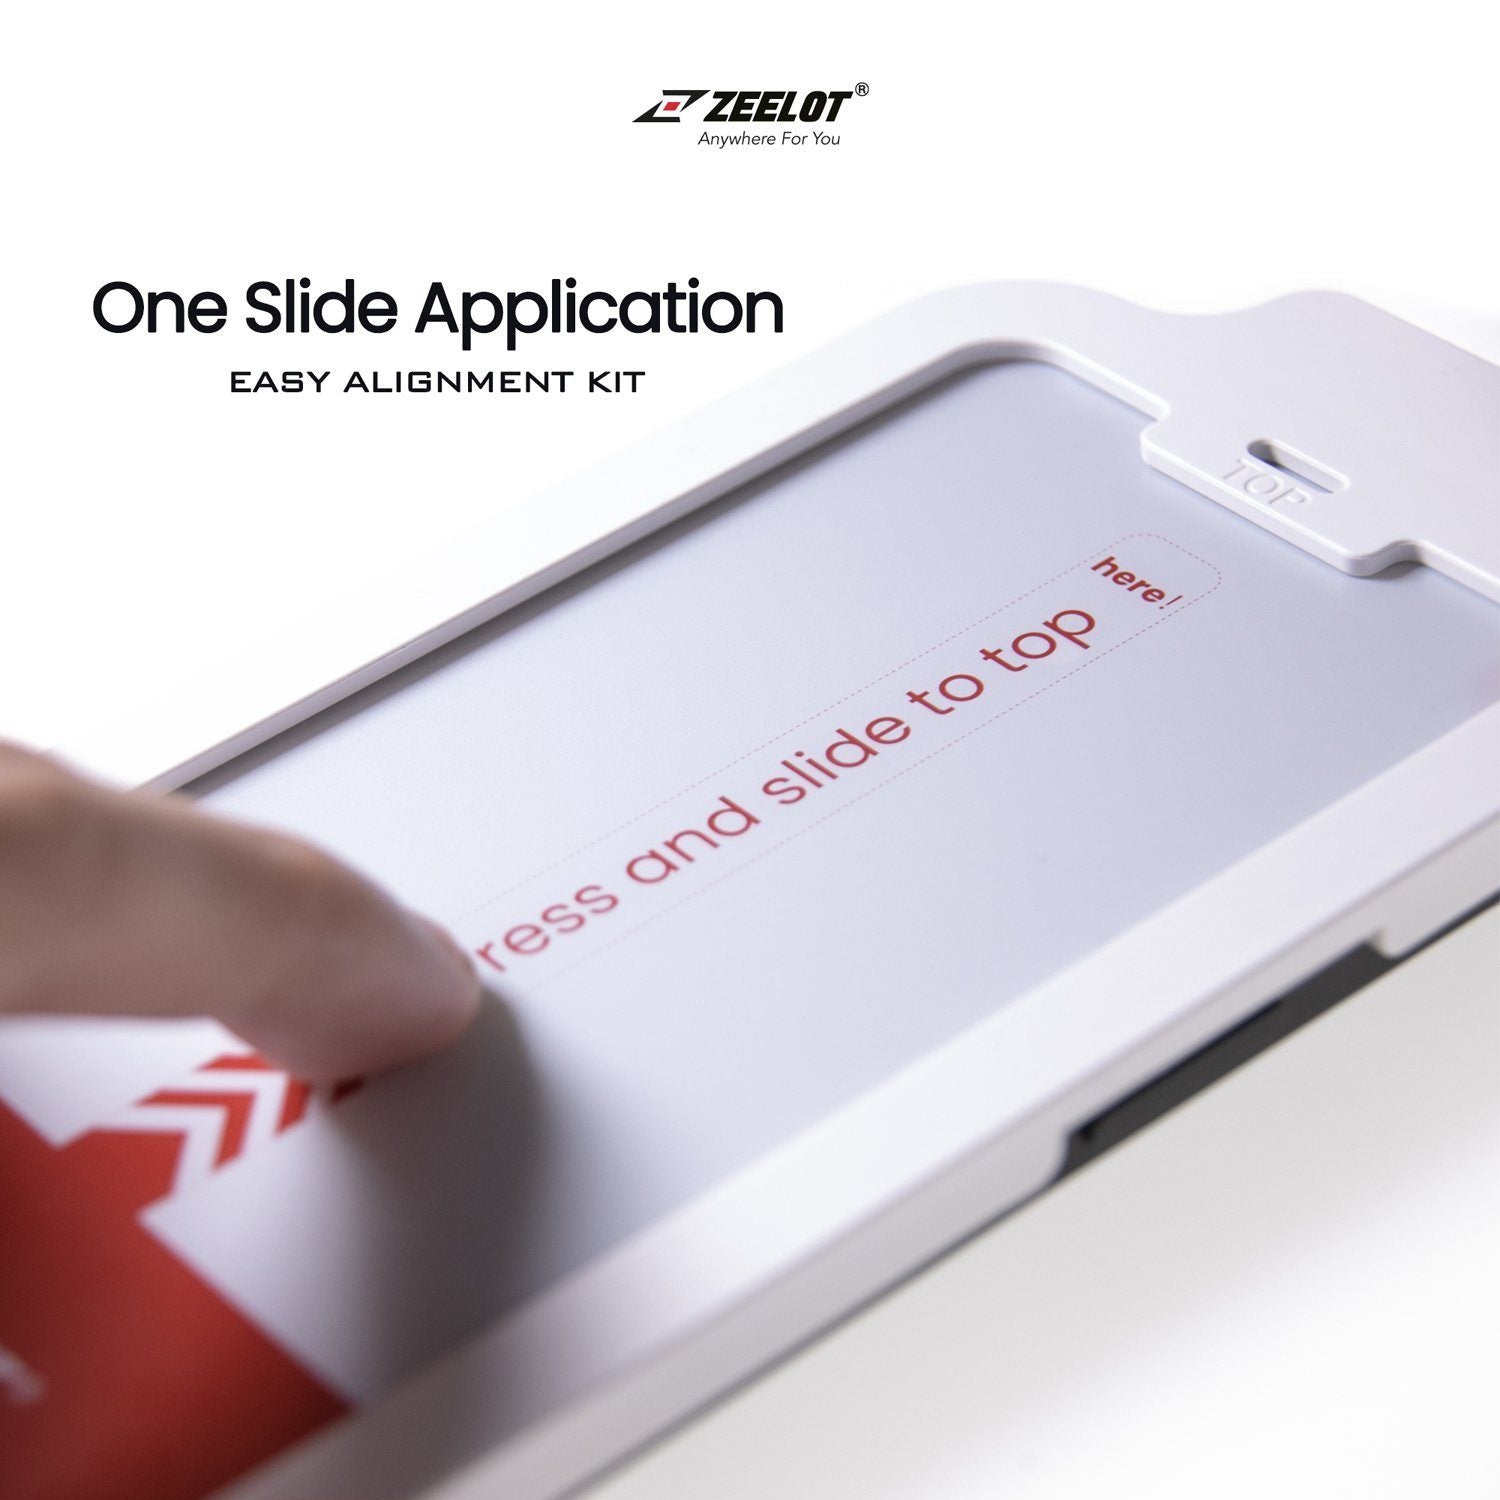 ZEELOT SOLIDsleek Tempered Glass Screen Protector with Easy Alignment Kit for iPhone 13 mini 5.4"(2021) Default ZEELOT 